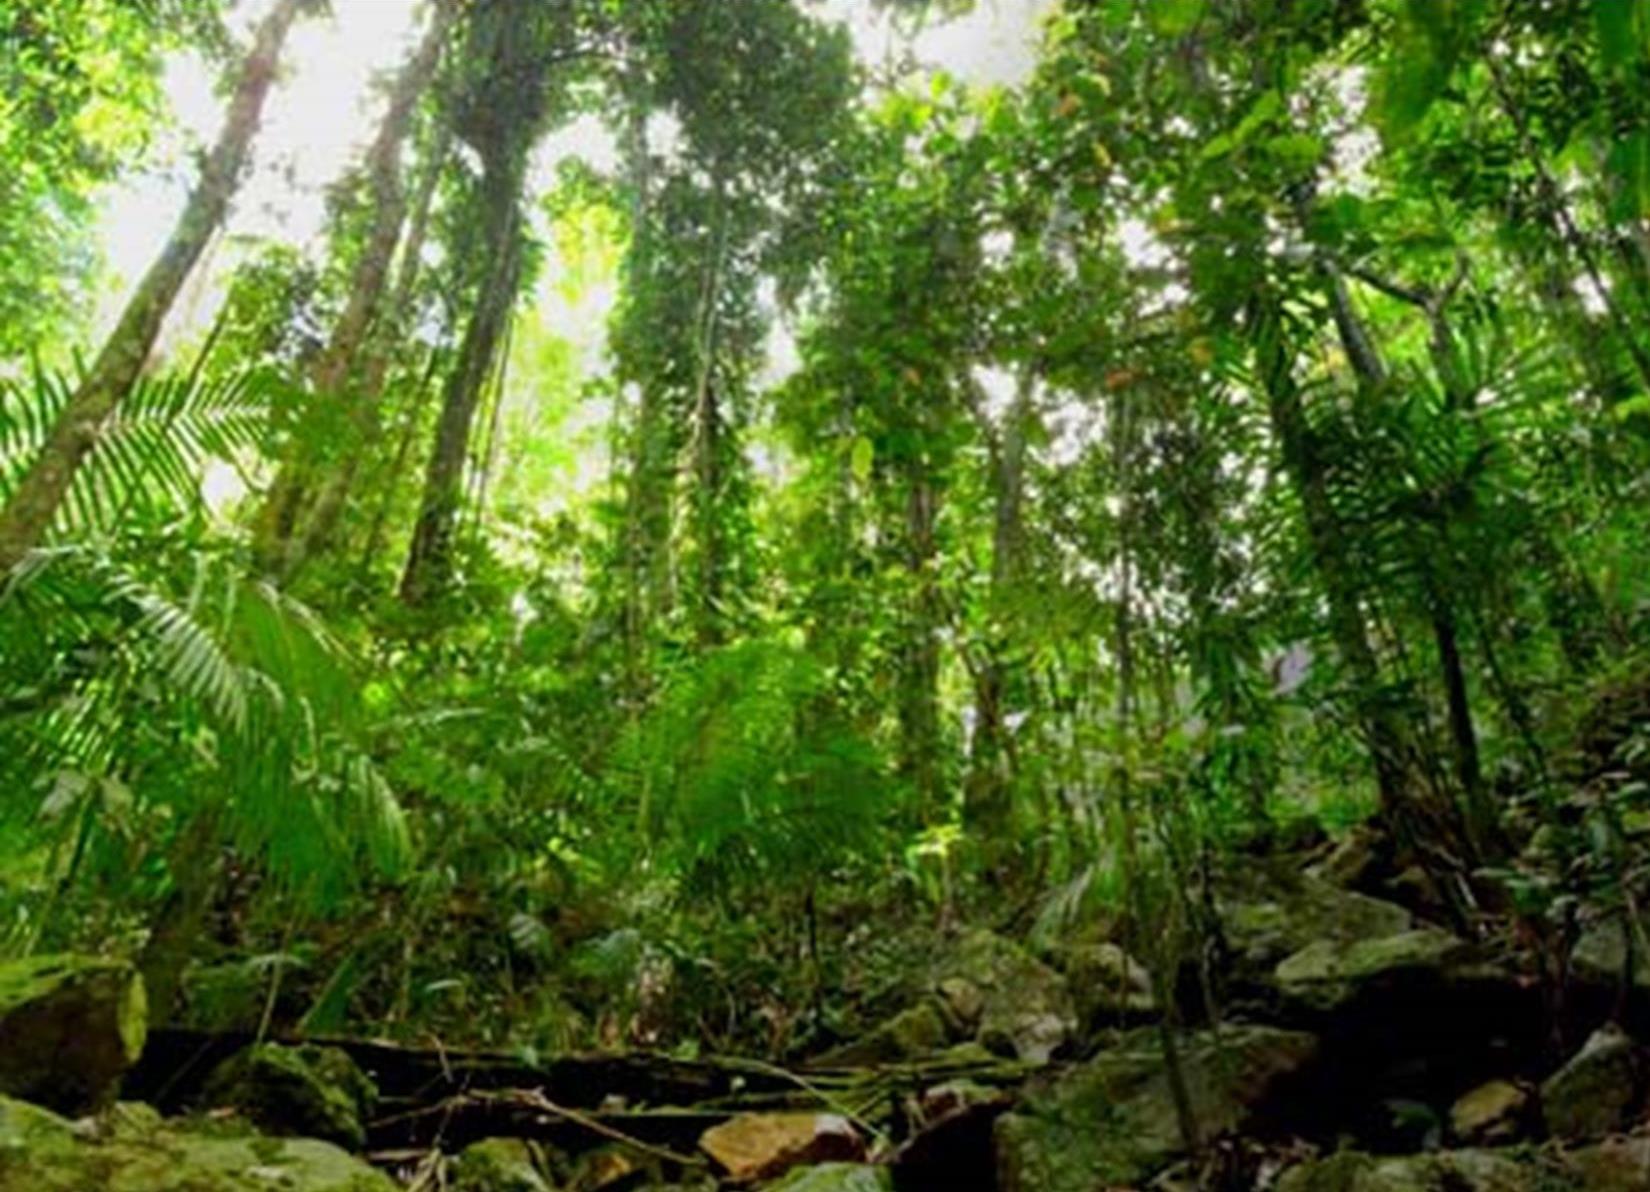 Hanya 1 Jam dari Palembang, Hutan Inggris Ini Disebut Menyimpan Banyak Misteri, Berani Kesana?